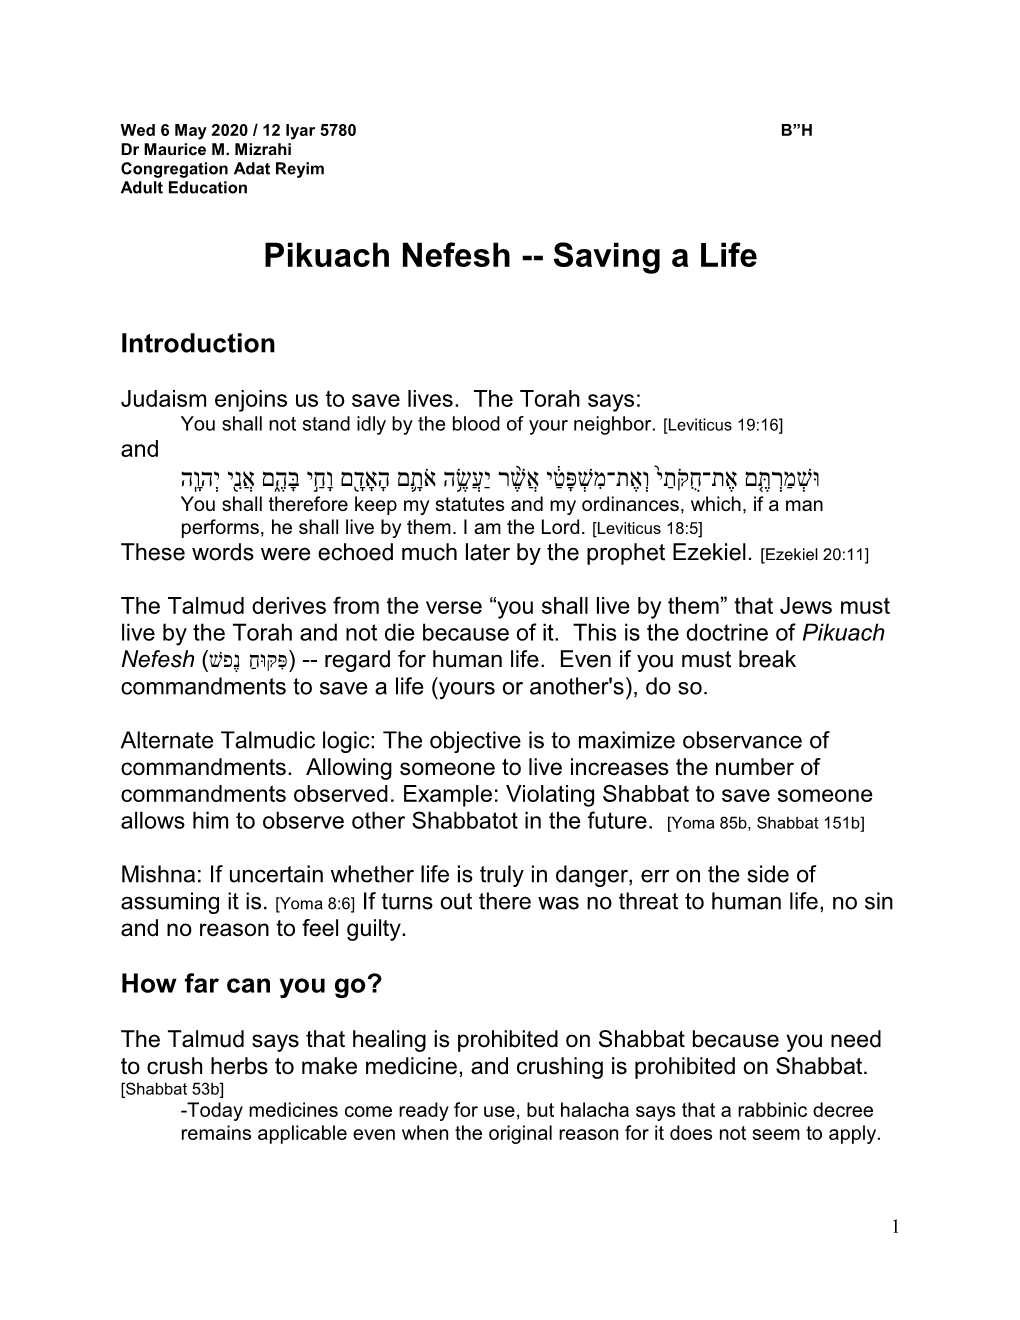 Pikuach Nefesh -- Saving a Life